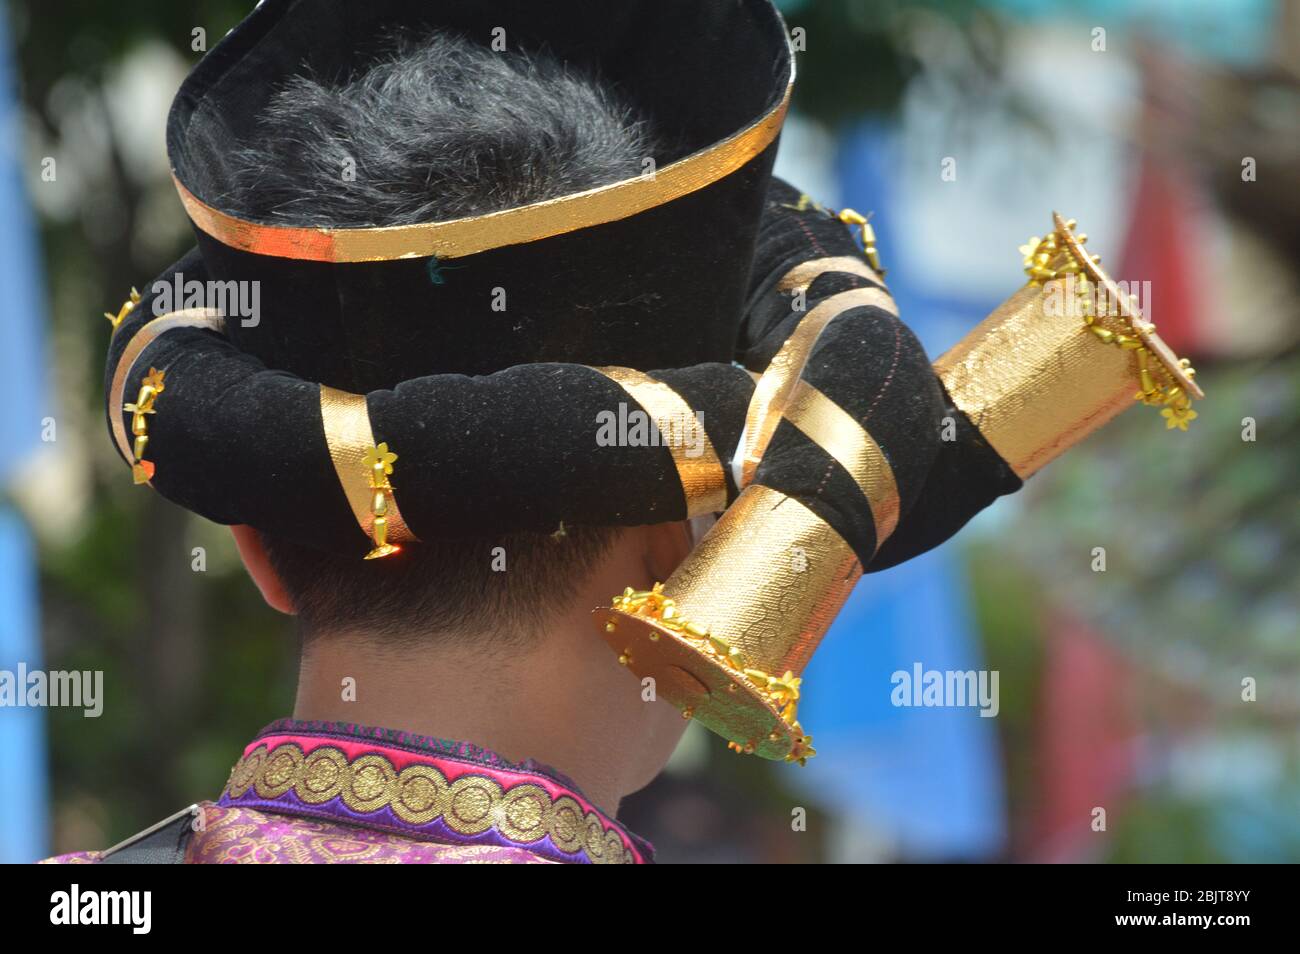 TARAKAN - INDONESIA, 25th July 2018 : Ampu, the cap or head covering of the North Sumatra Mandailing tribe Stock Photo